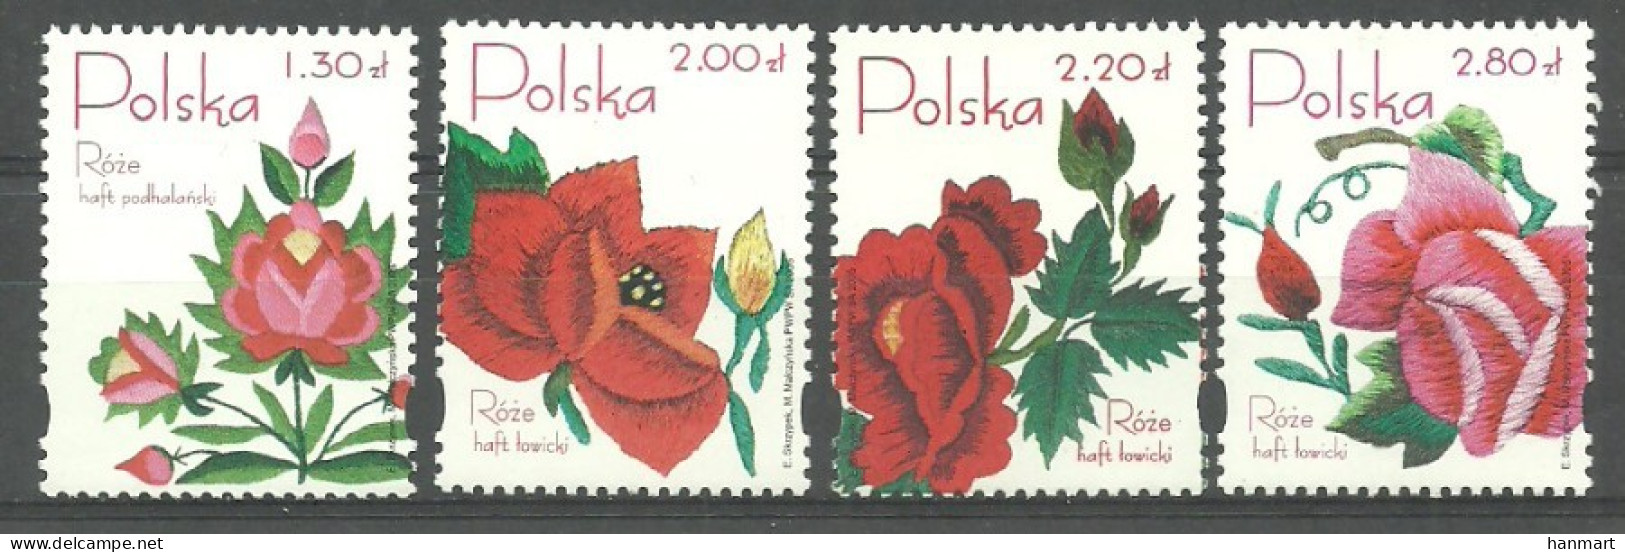 Poland 2005 Mi 4195-4198 Fi 4045-4048 MNH  (ZE4 PLD4195-4198) - Textile